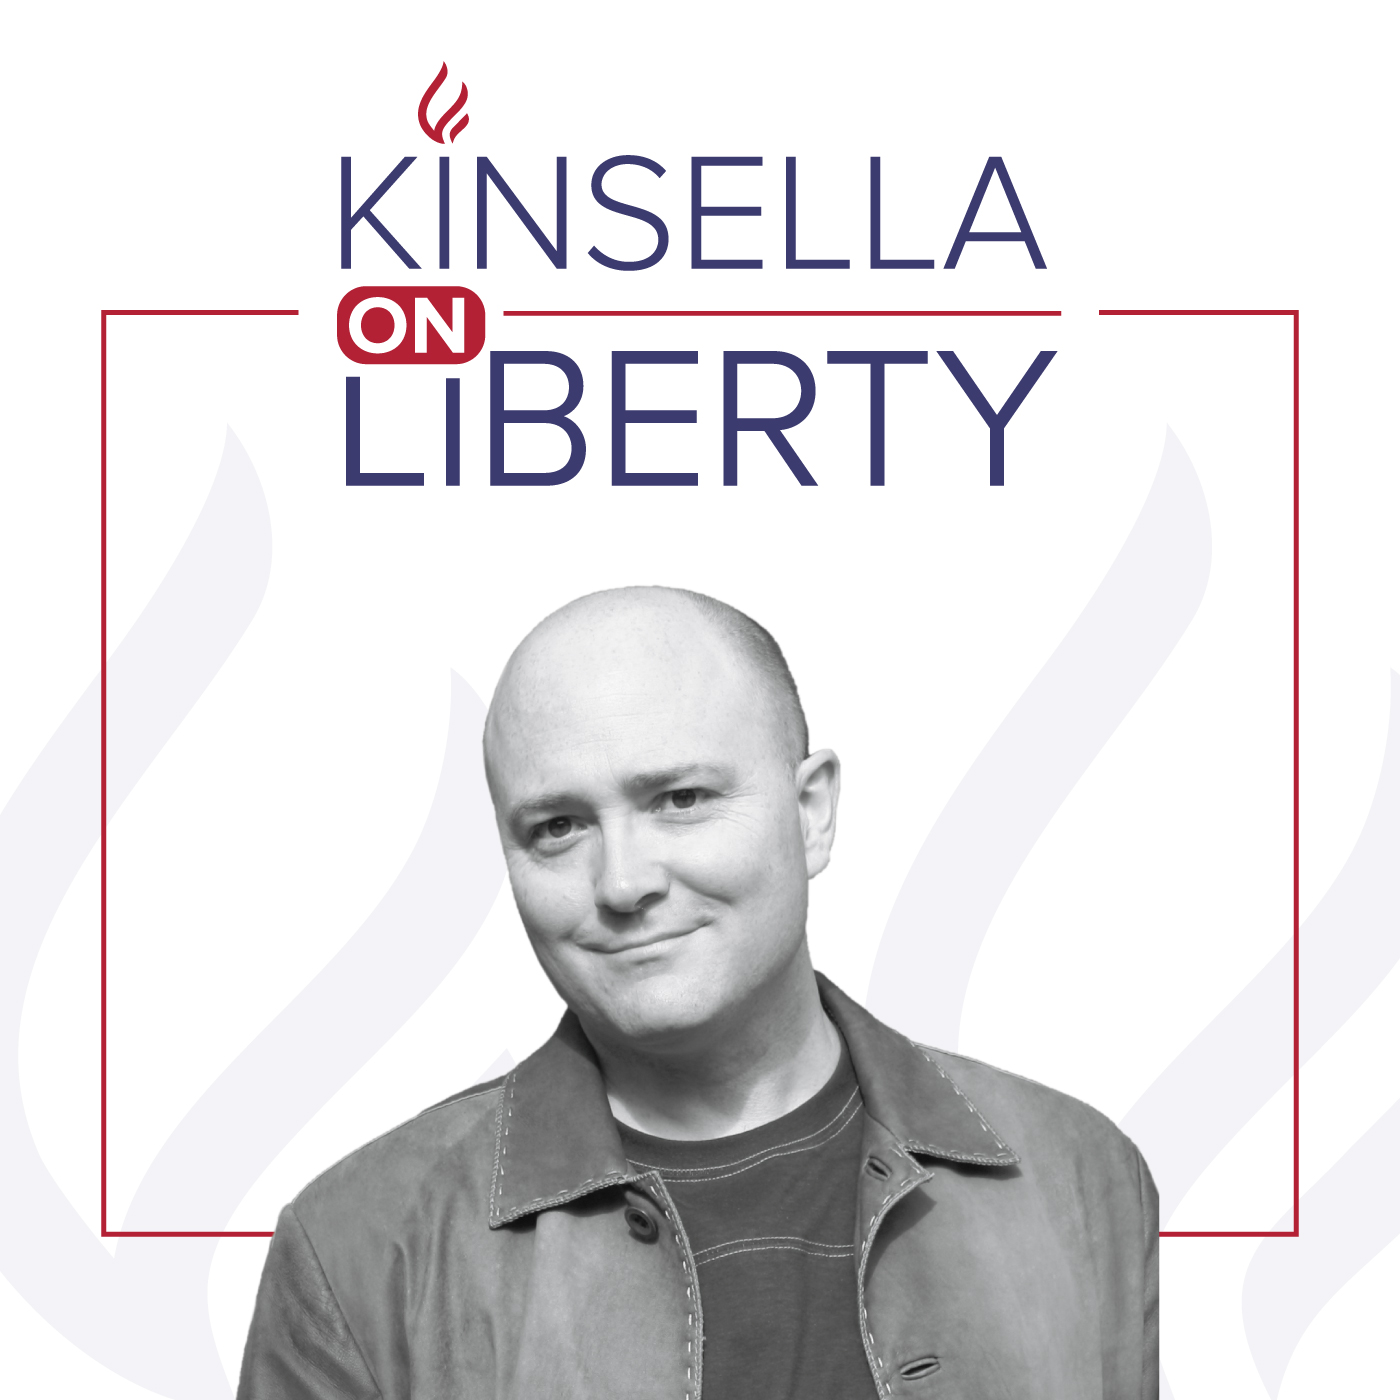 Kinsella on Liberty